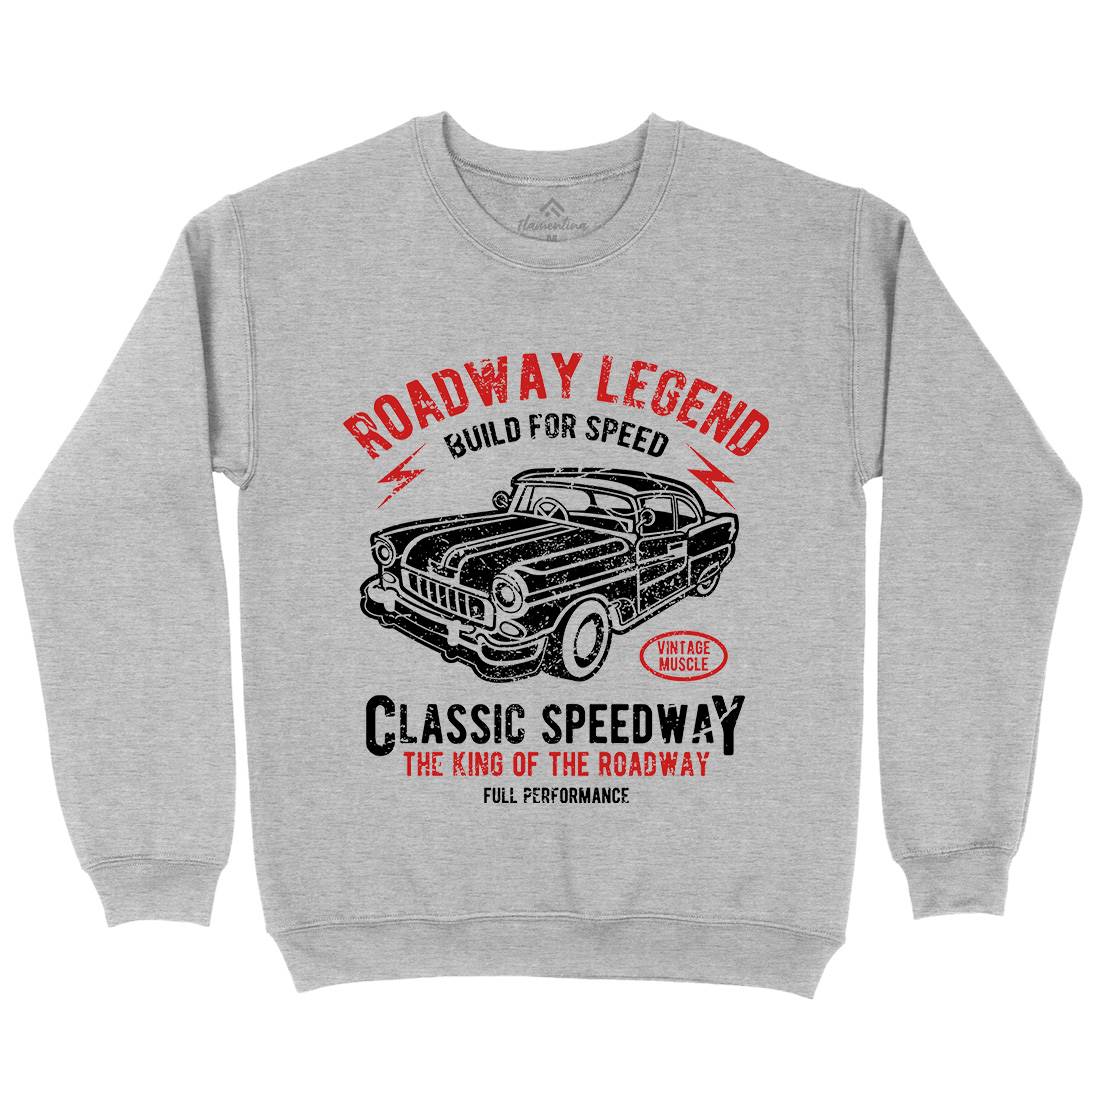 Roadway Legend Kids Crew Neck Sweatshirt Cars A124